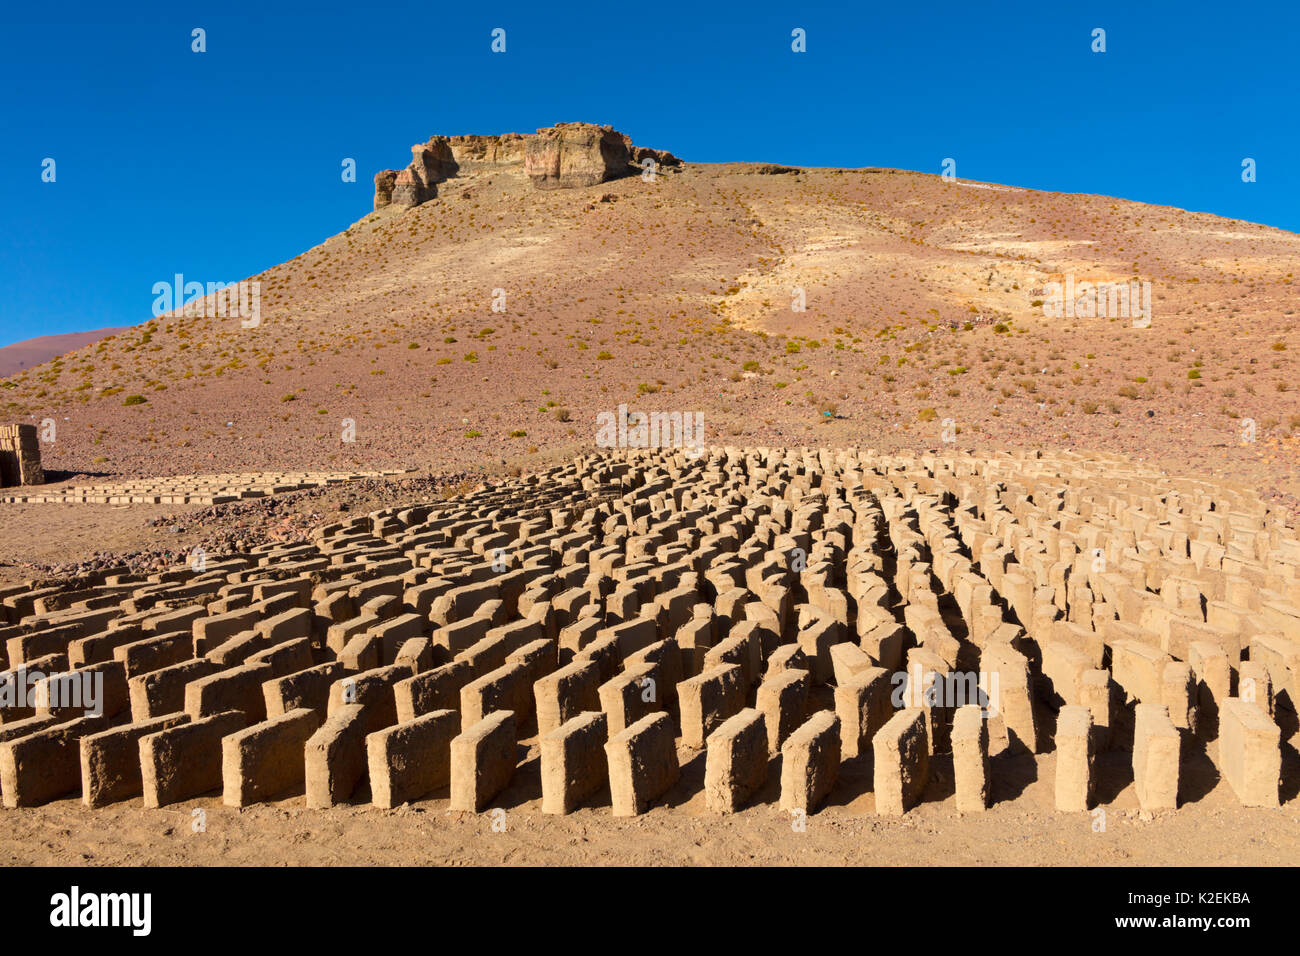 Adobe mud bricks drying in the sun. Bolivia. Stock Photo